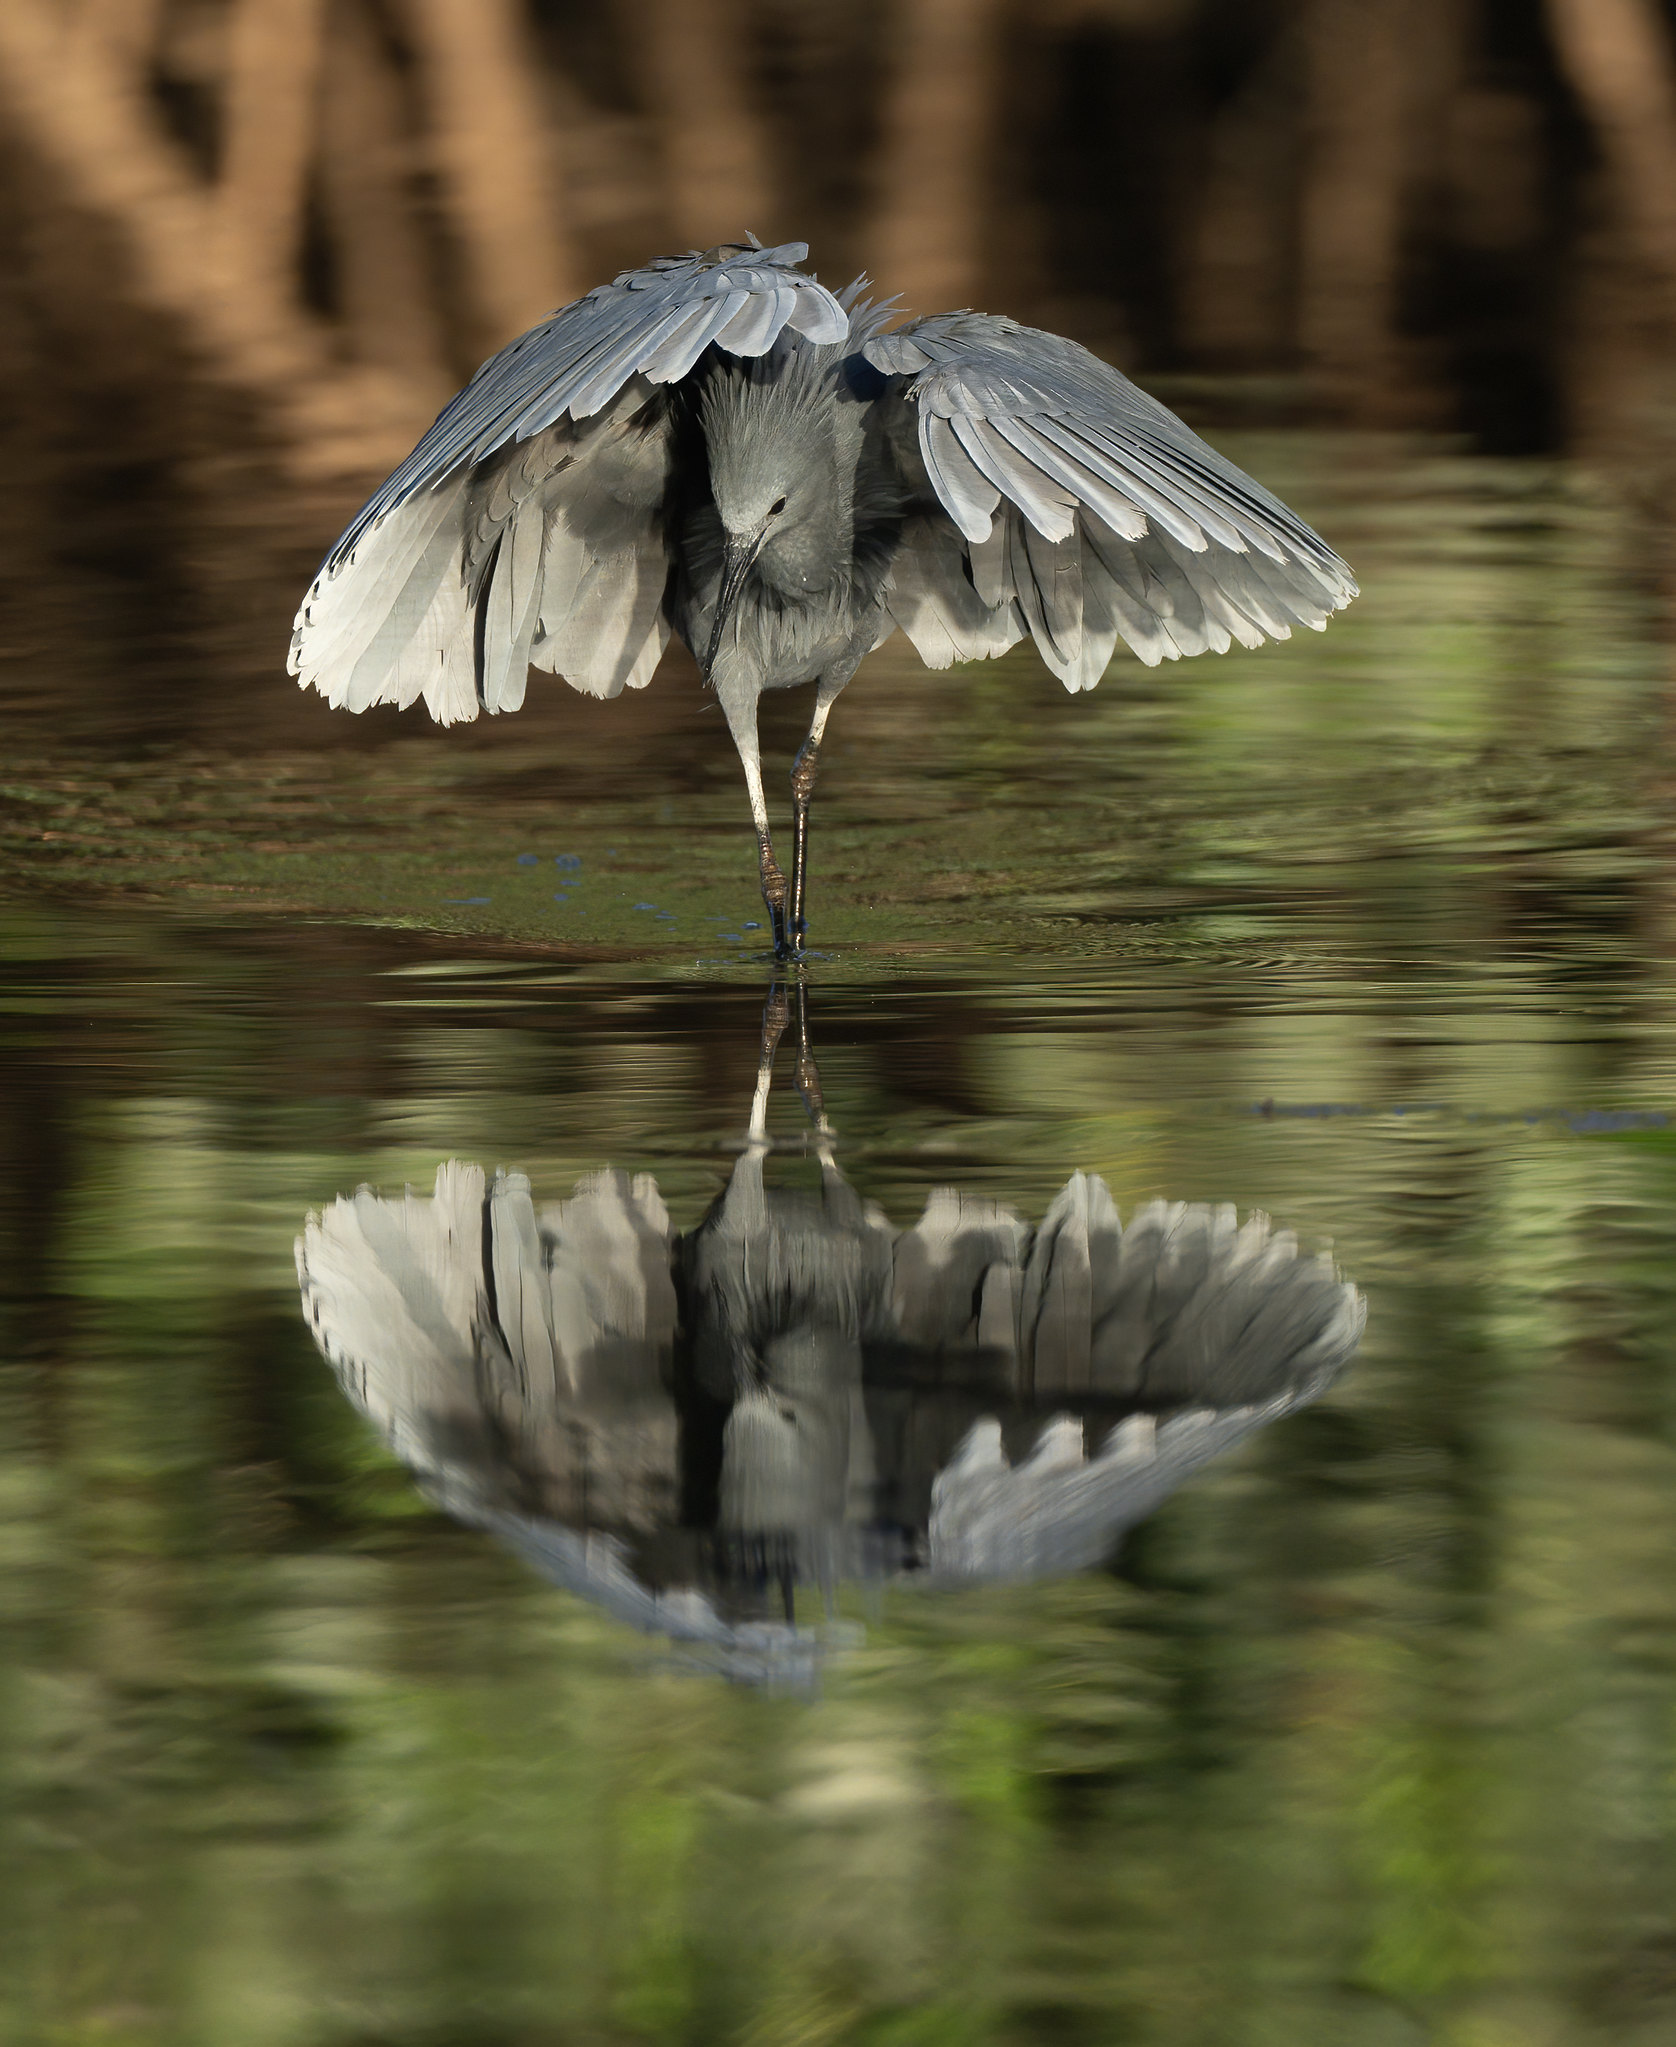 Black Egret - Umbrella Bird - what a star!